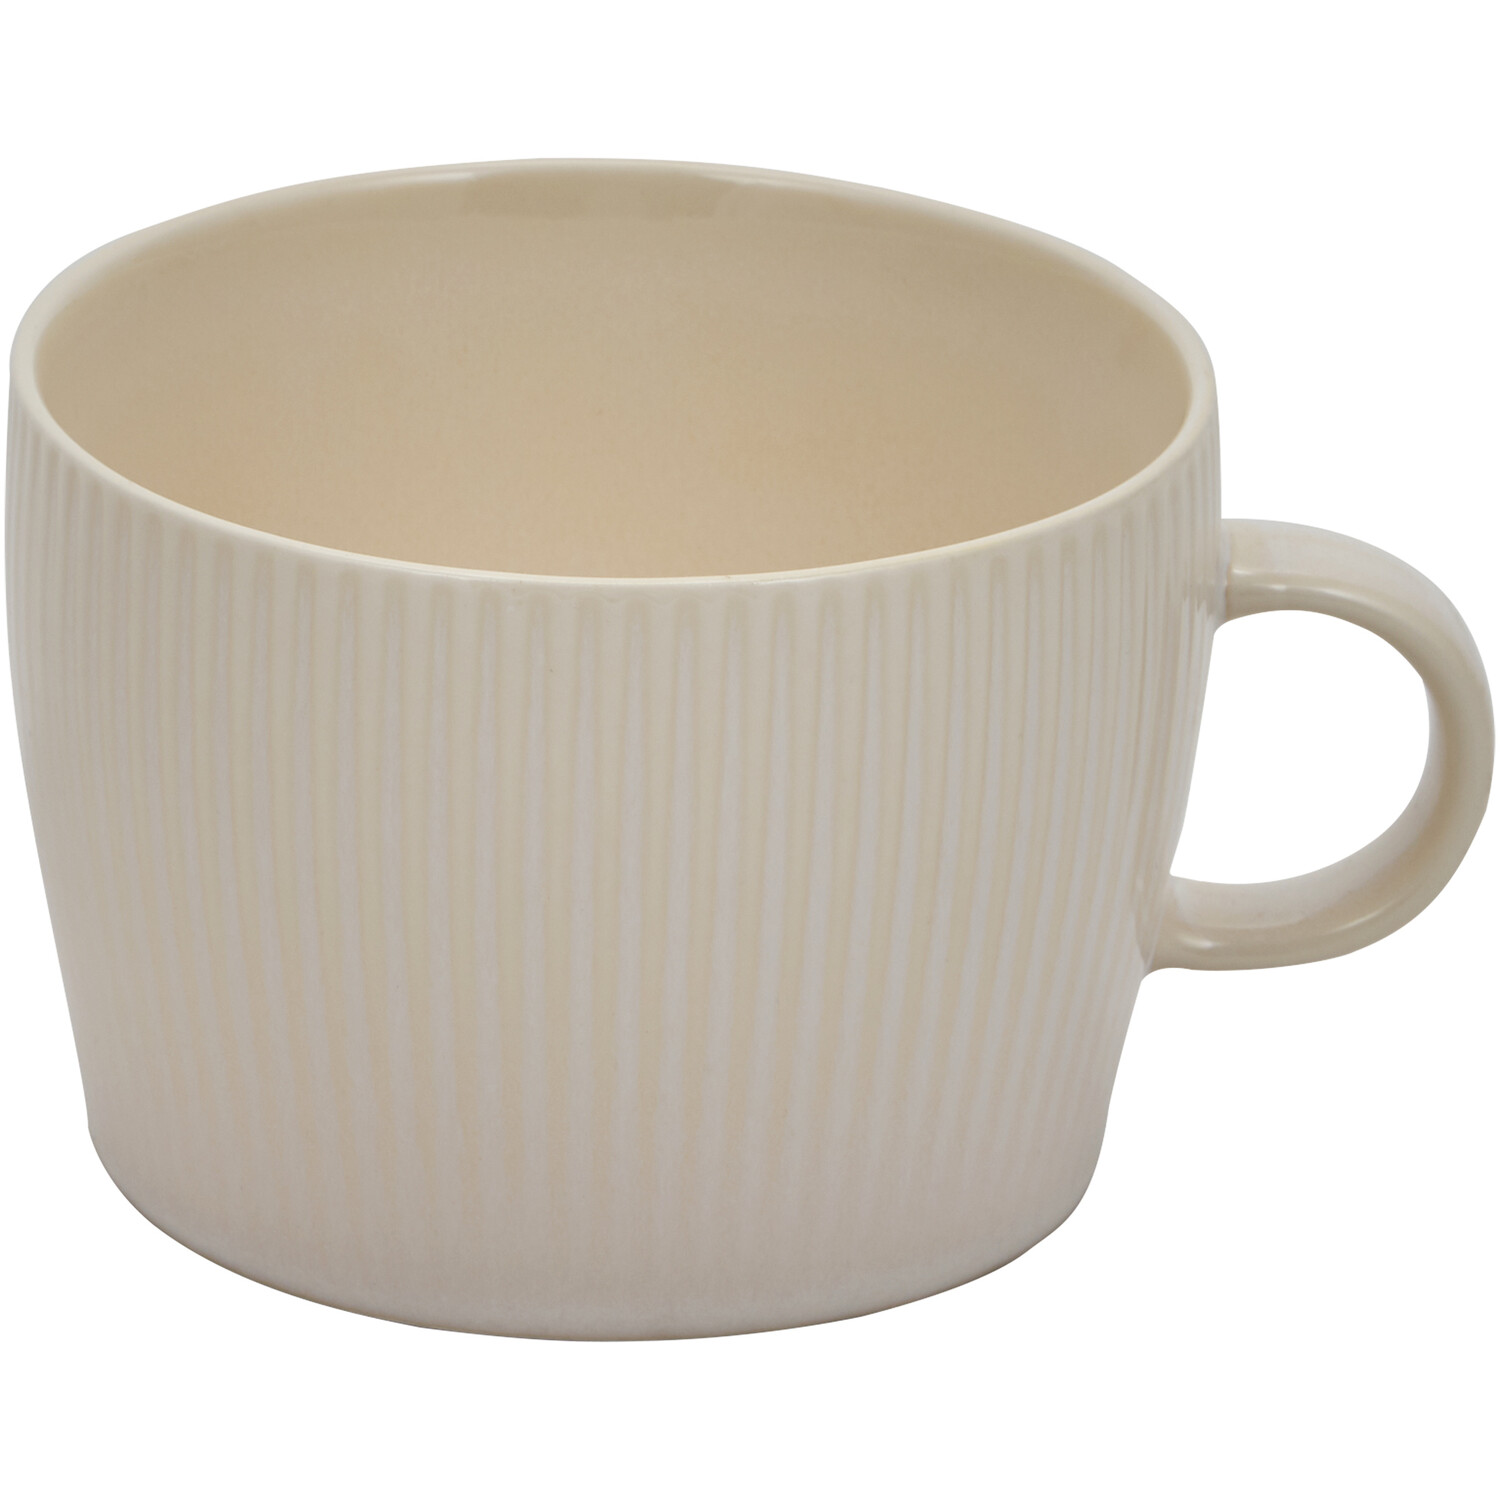 Ceramic Mug - White Image 1